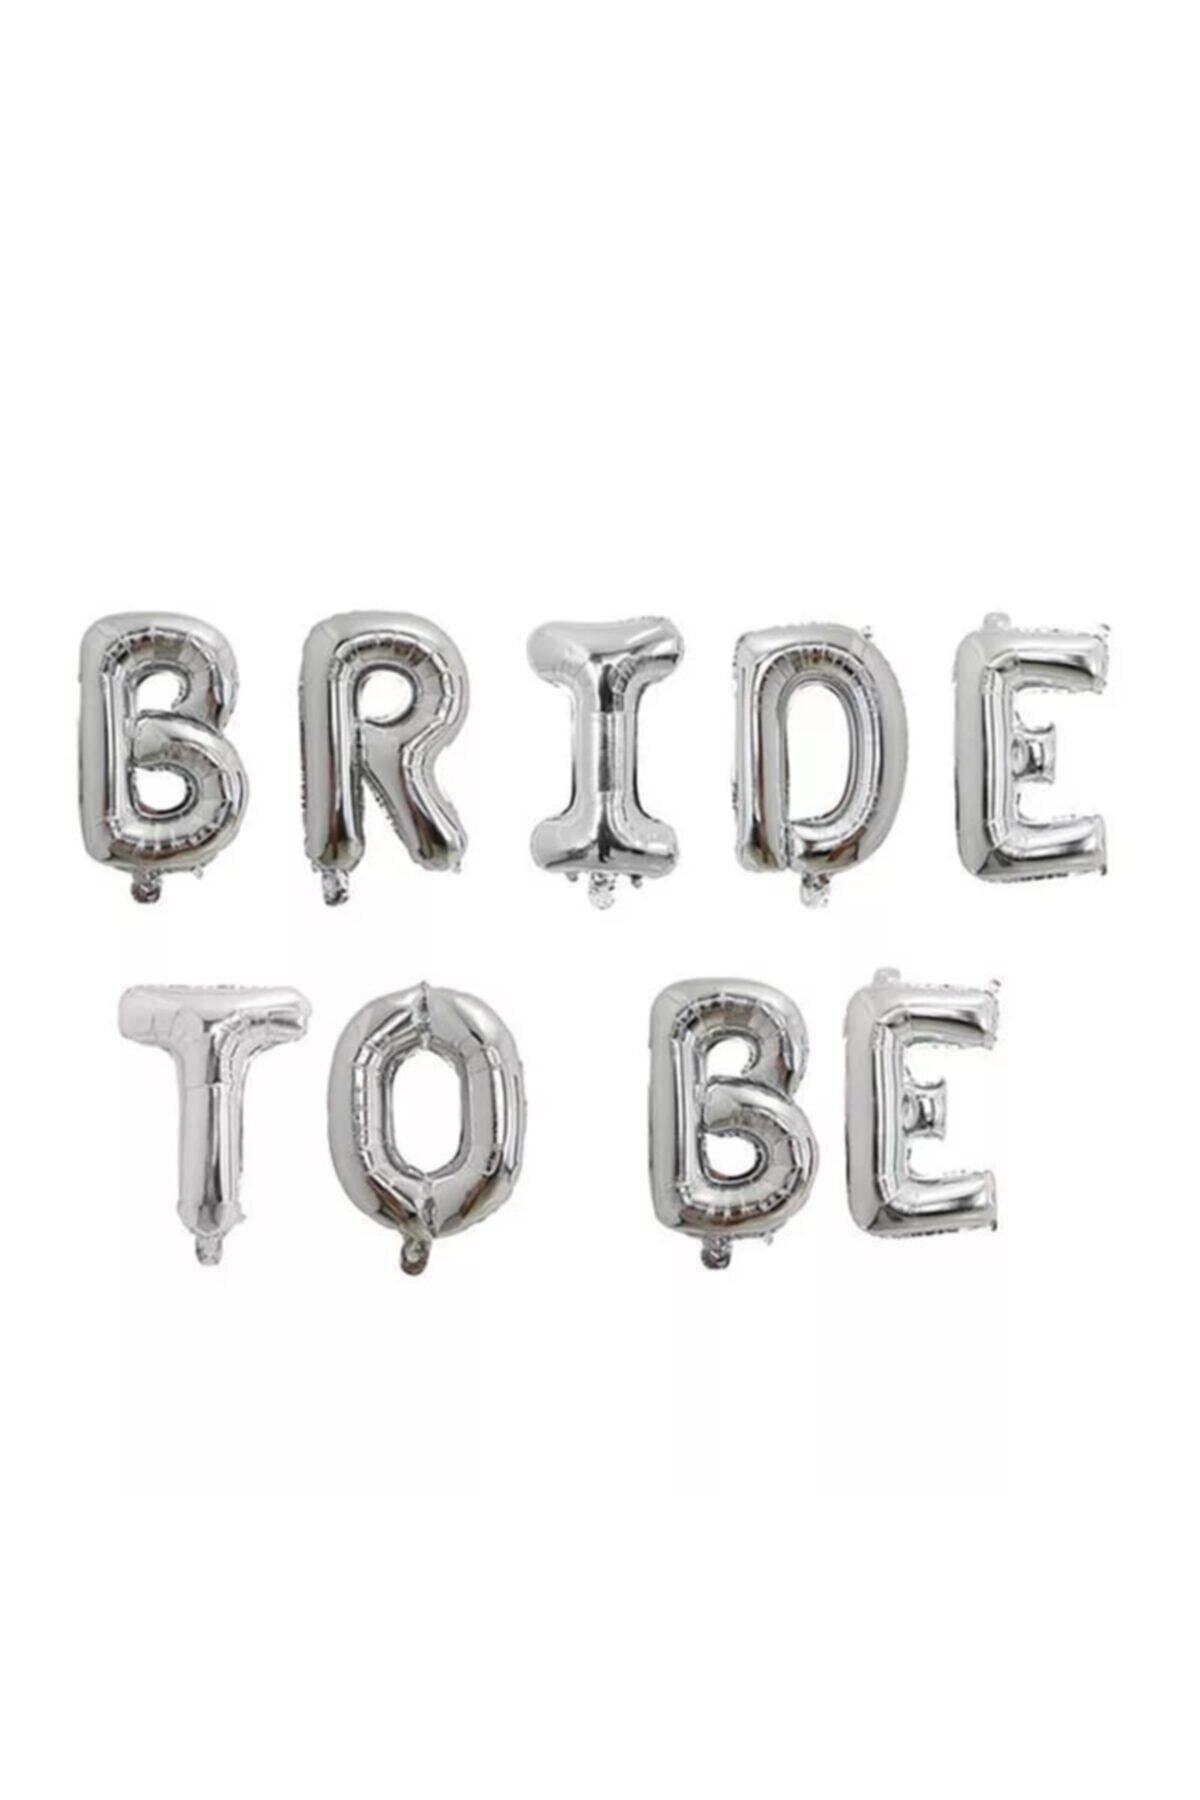 Deniz Party Store Bride To Be Folyo Balon Set Bekarlığa Veda Balon Seti 16"inç 40 Cm Gümüş